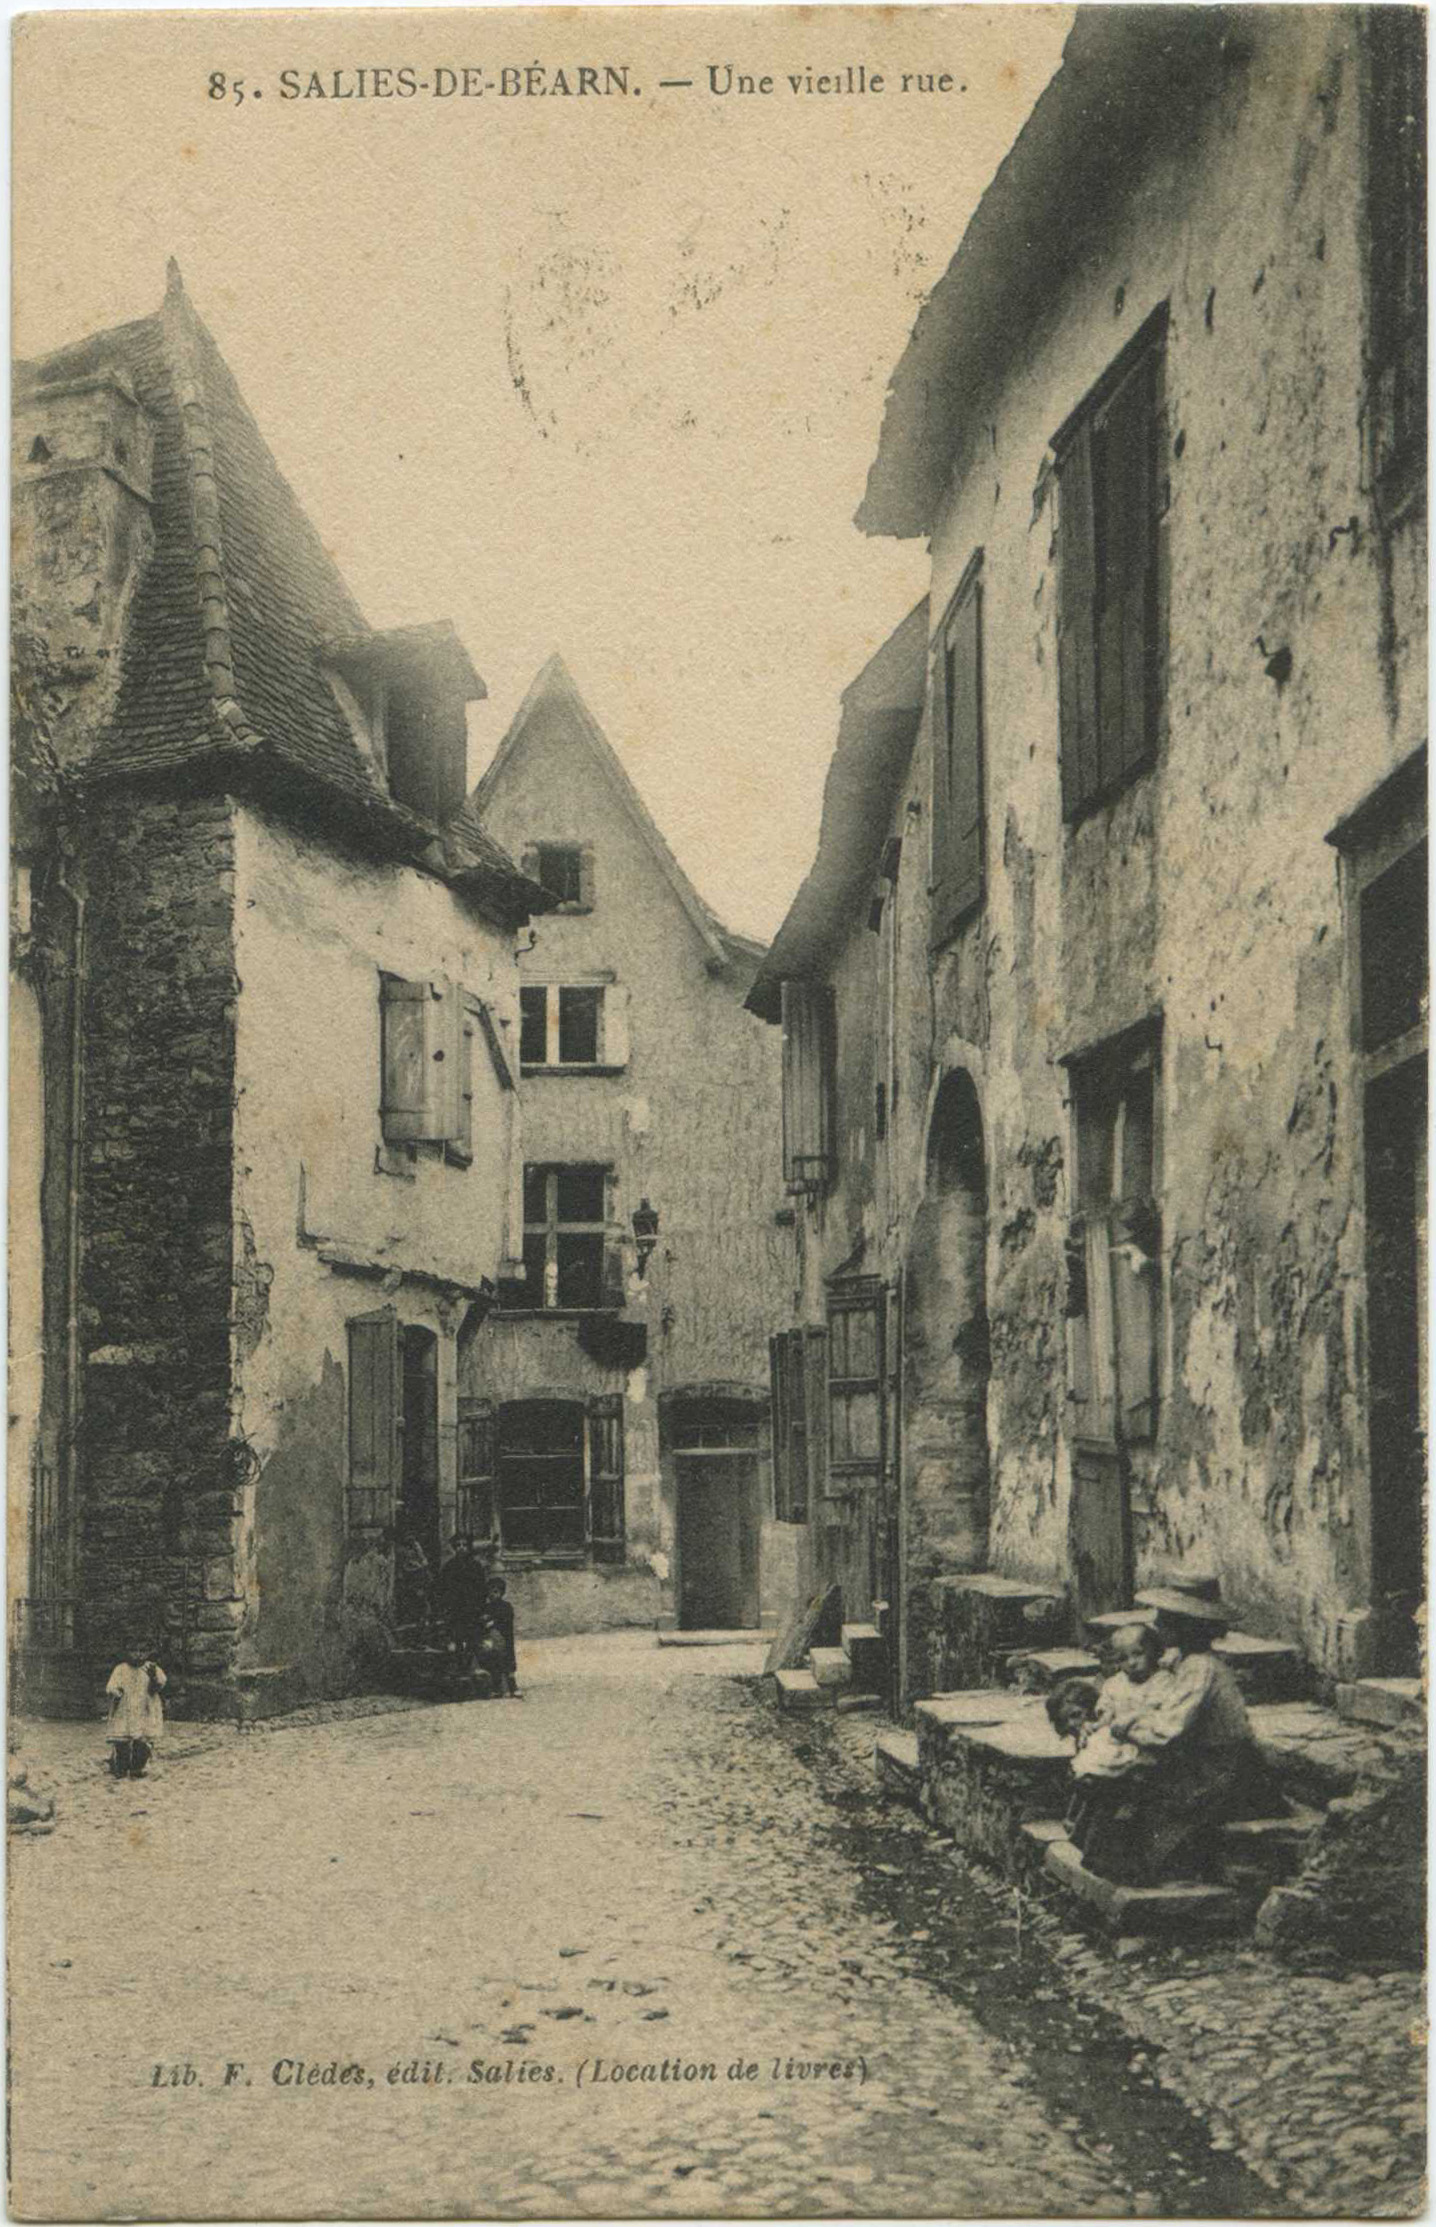 Salies-de-Béarn - Une vieille rue.